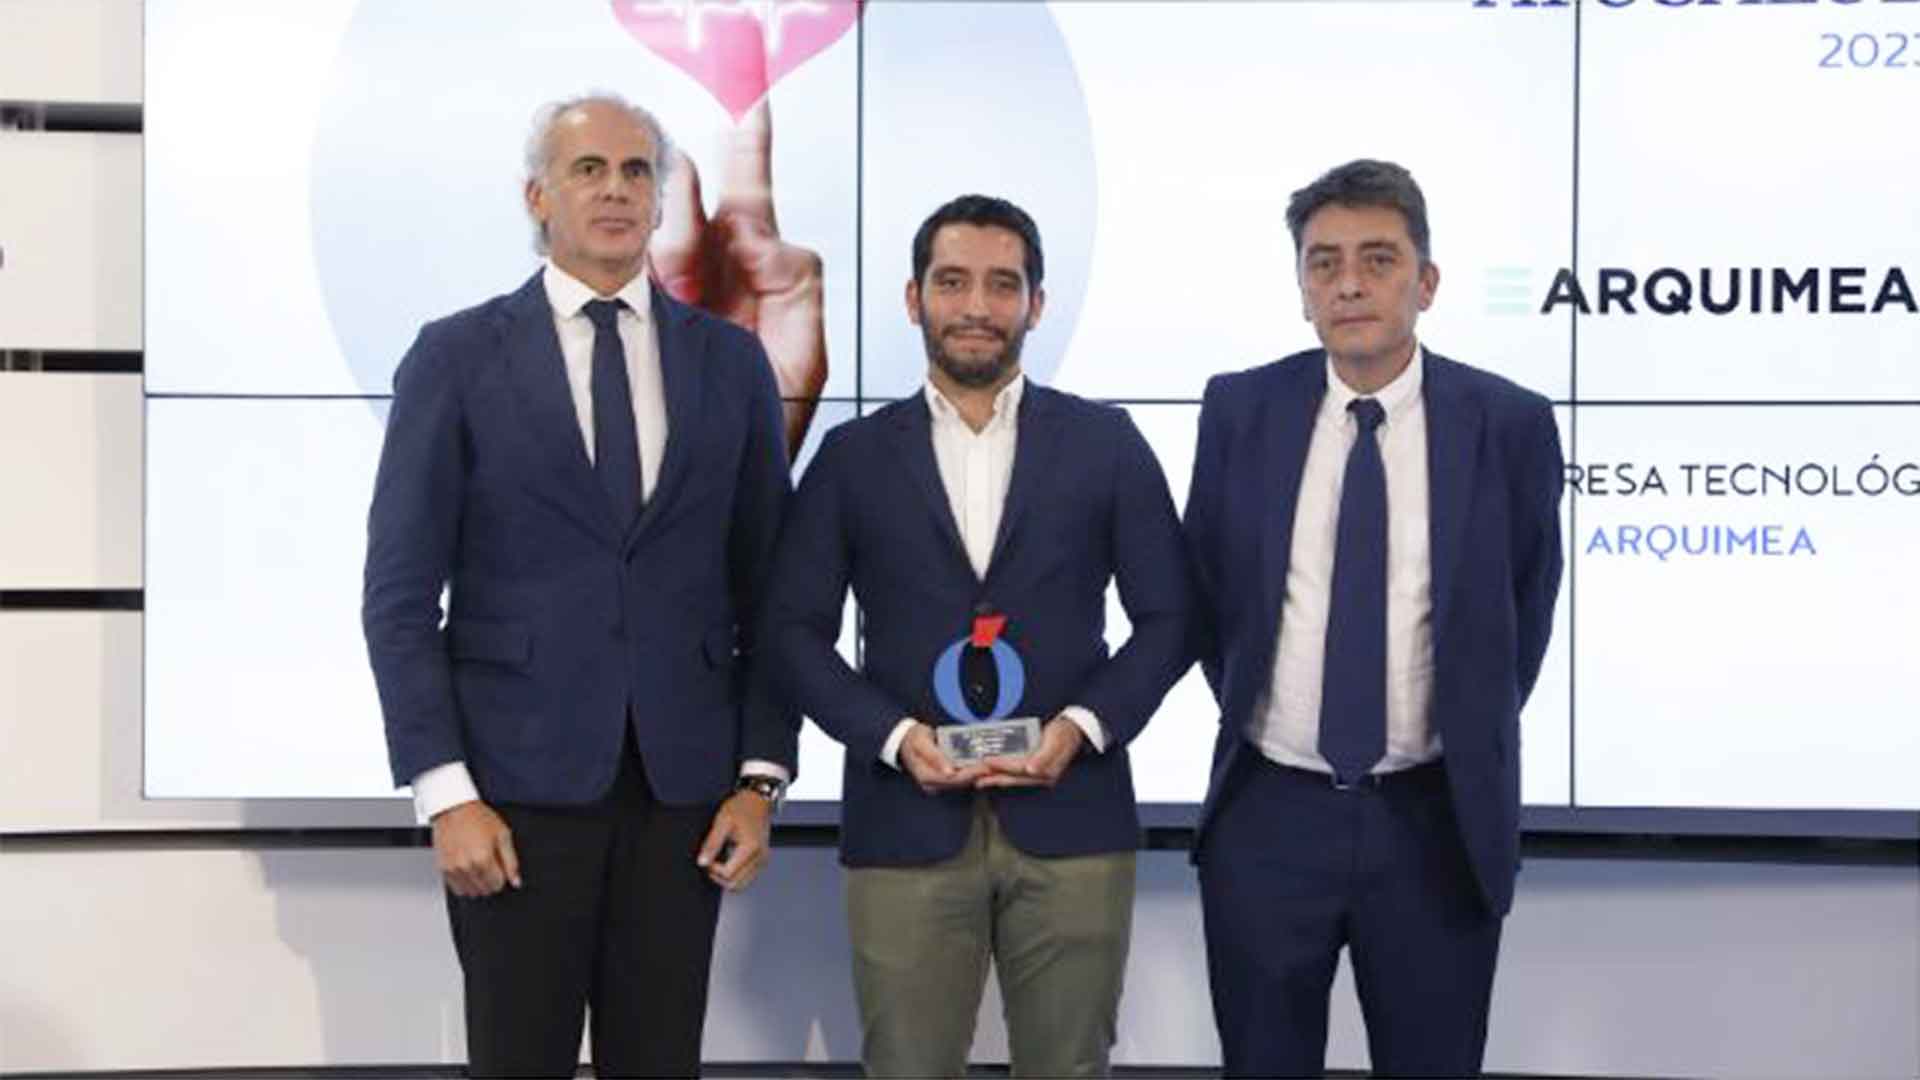 Award for 'Health Technology Company' | ARQUIMEA